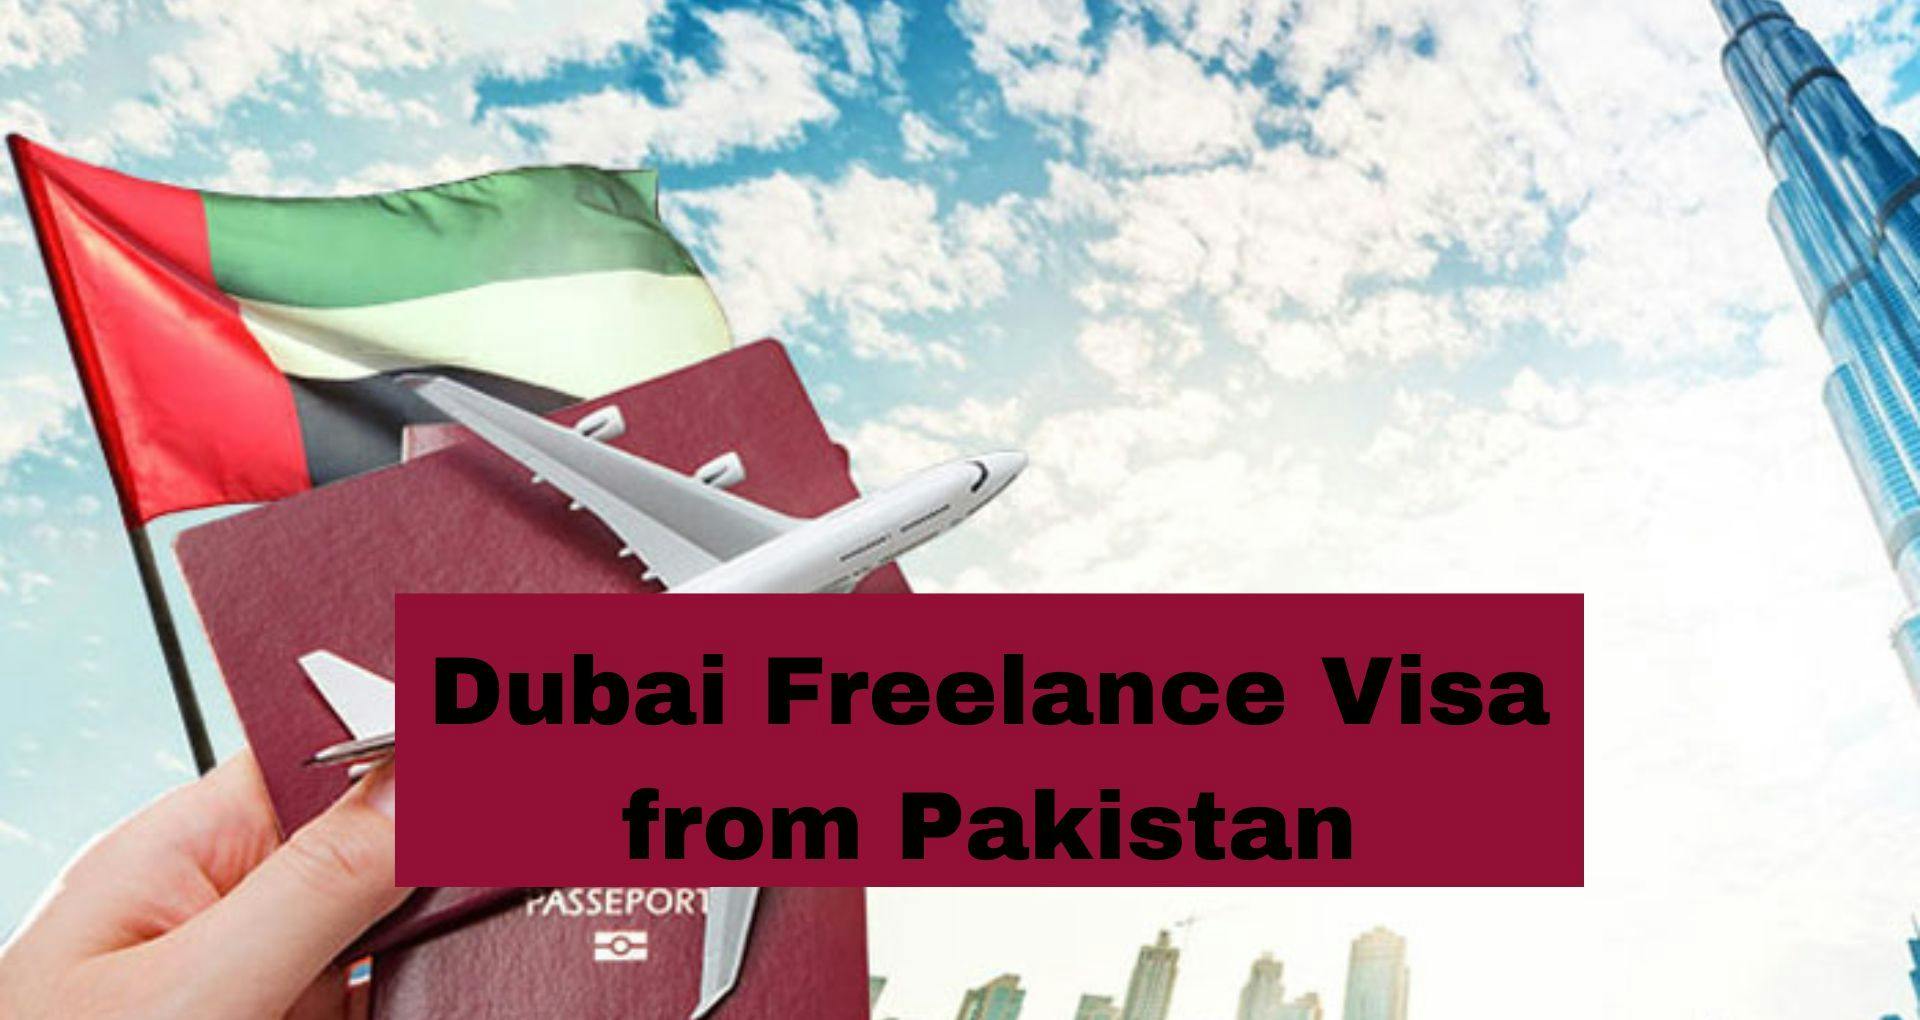 Dubai Freelance Visa from Pakistan